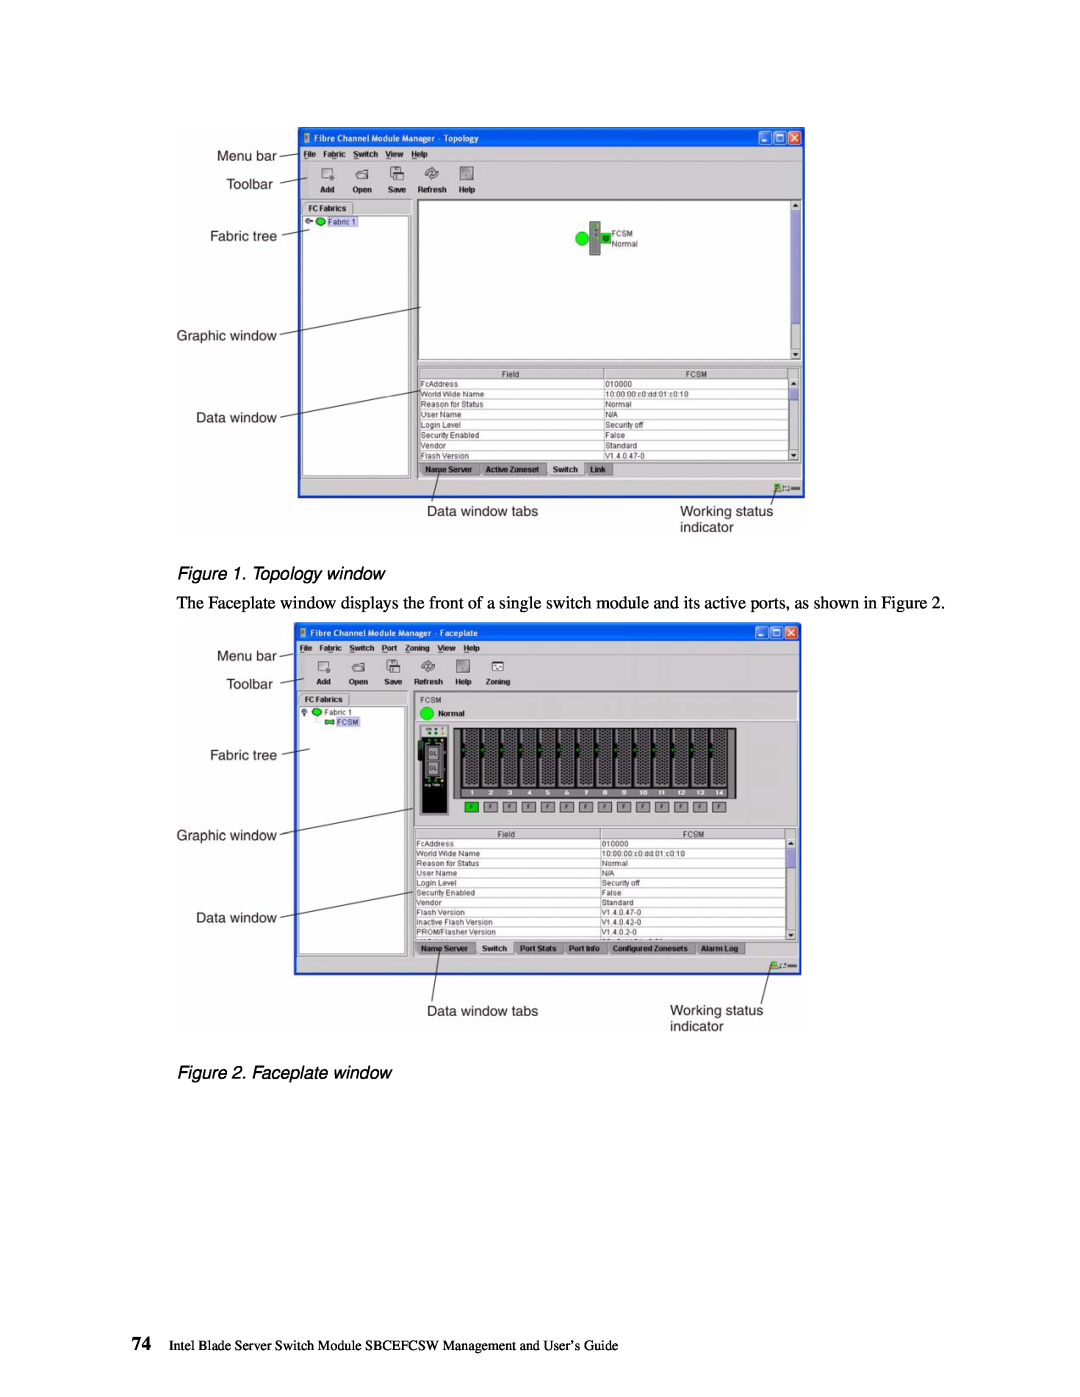 Intel SBCEFCSW manual Topology window, Faceplate window 